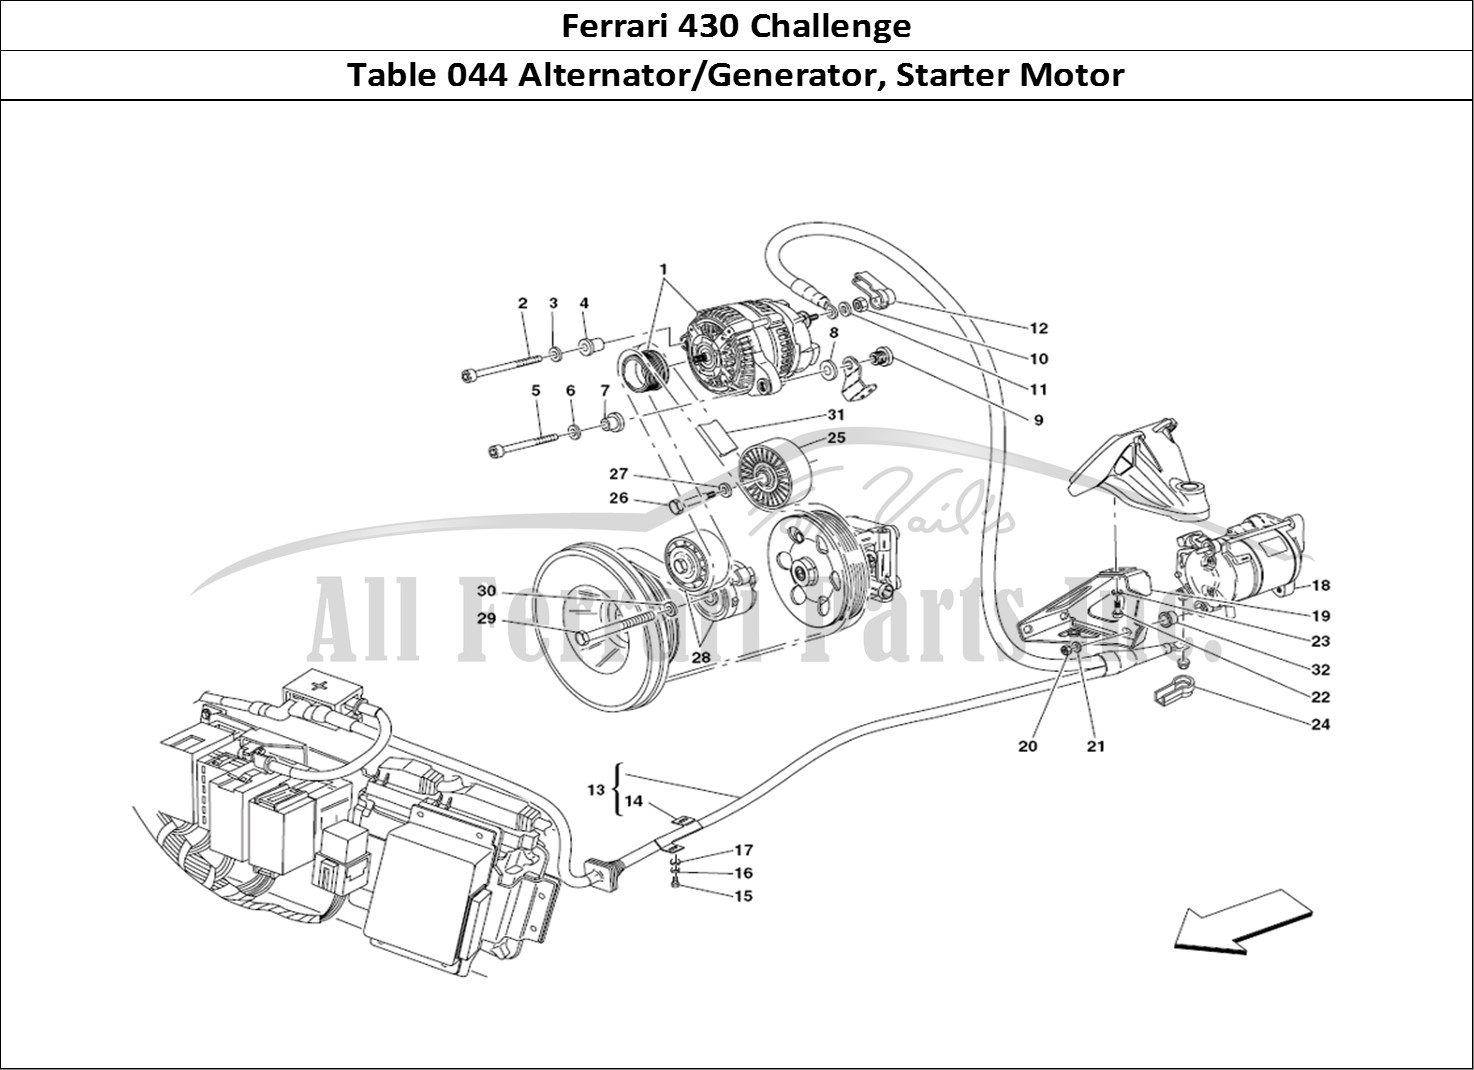 Ferrari Parts Ferrari 430 Challenge (2006) Page 044 Current Generator - Start